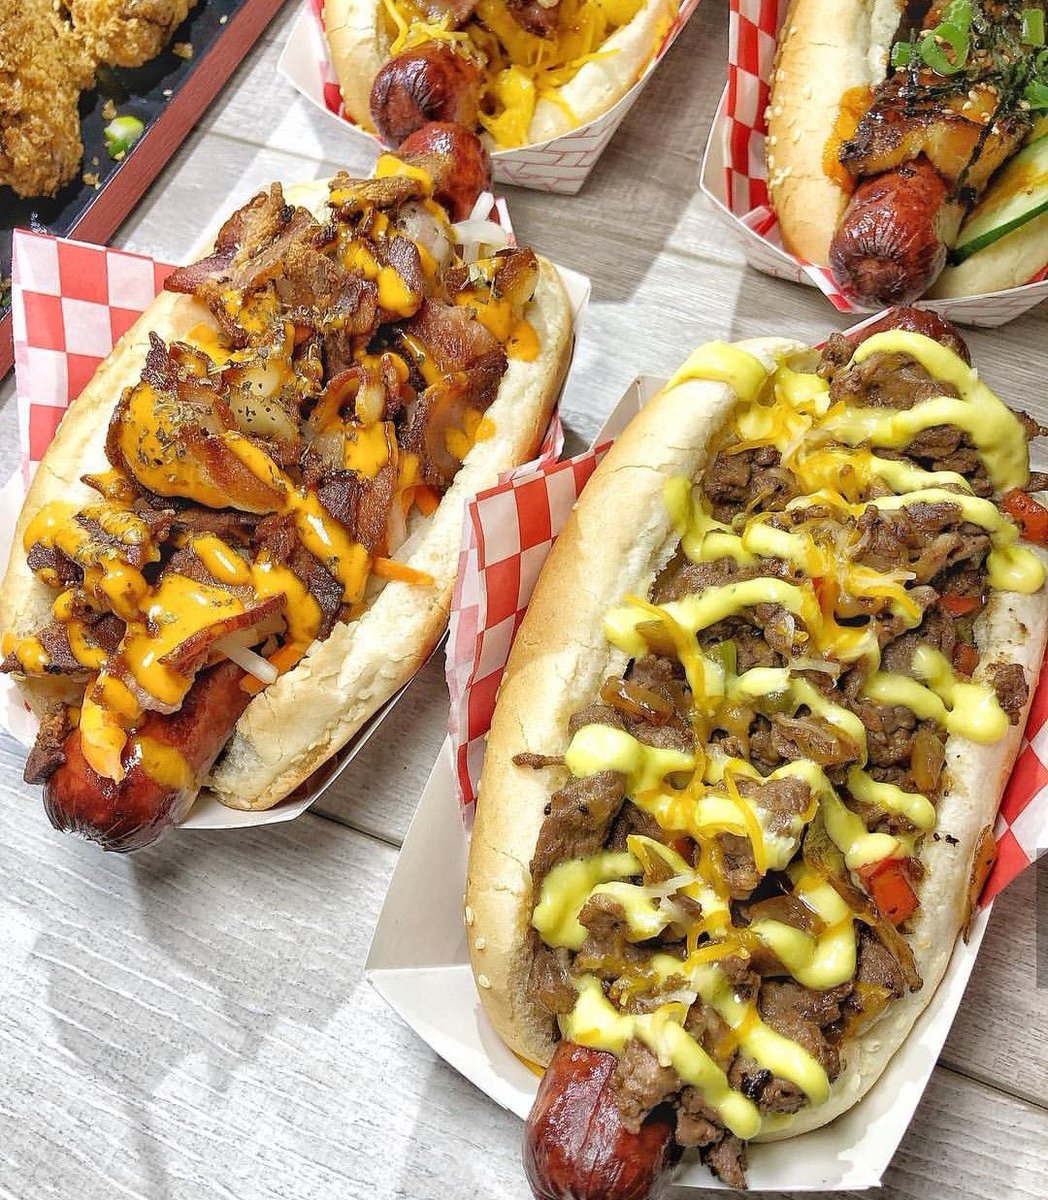 hotdogs 🌭

food poll for edtwt 💝